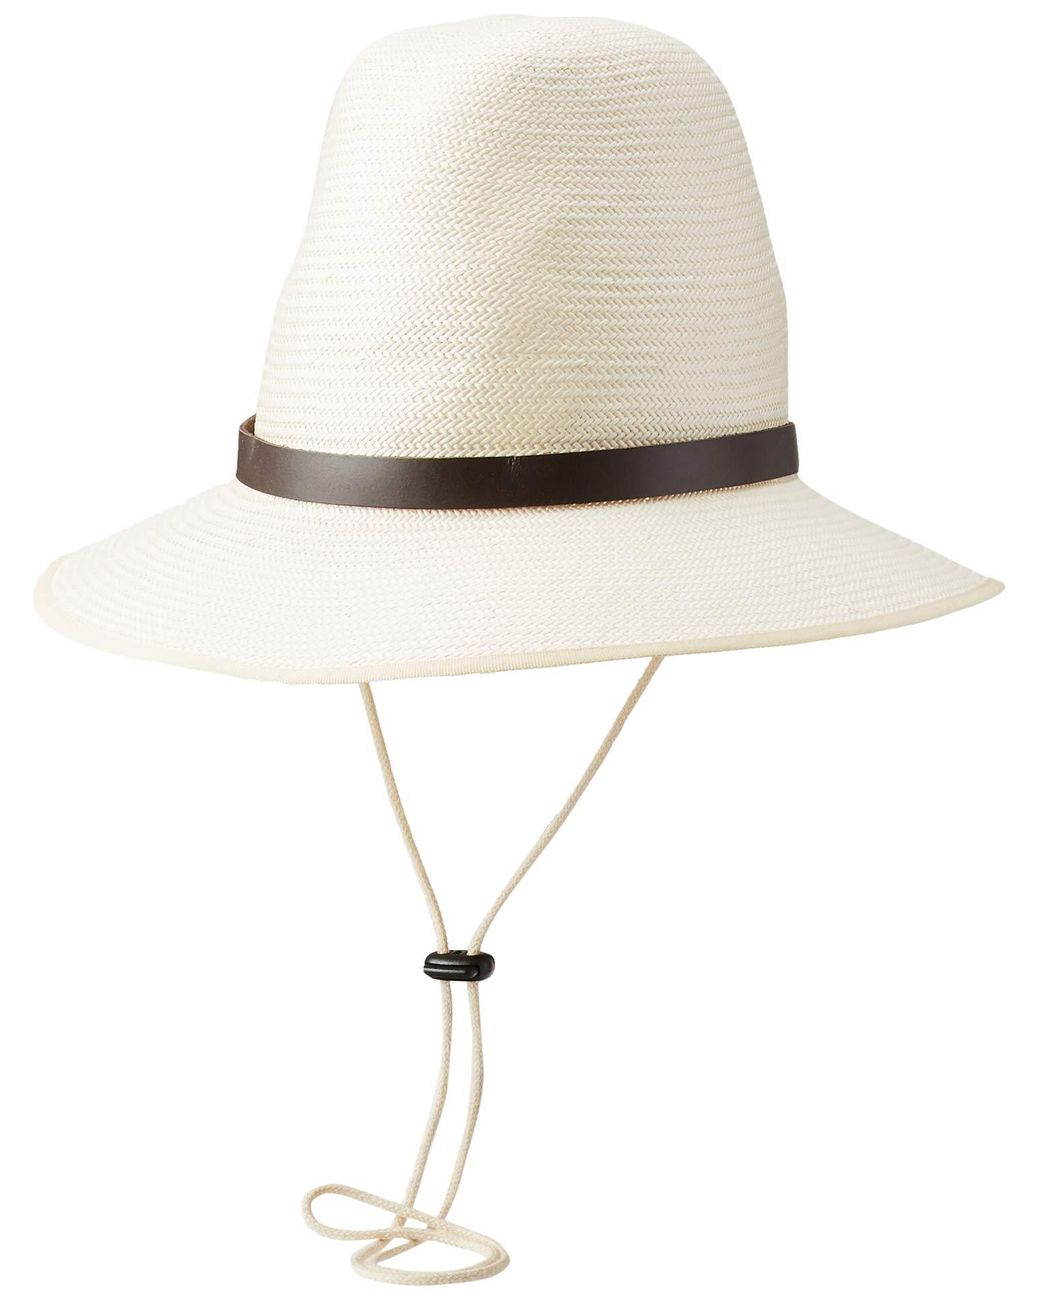 Lacoste Miami Open Panama Hat for Men